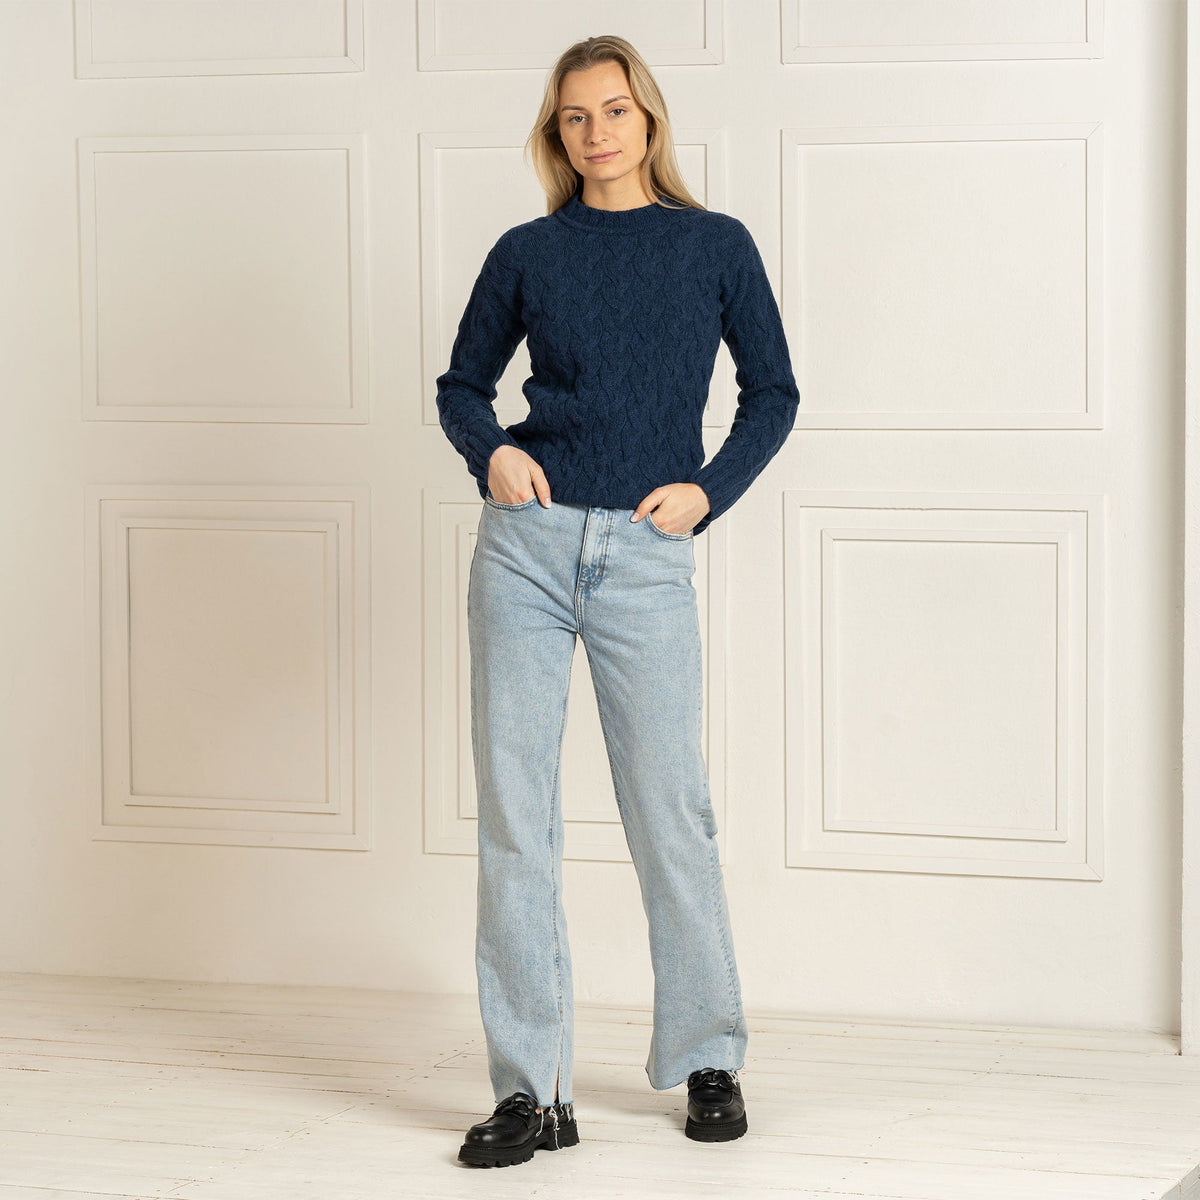 MENIQUE 100% Merino Wool Womens Knit Cable Sweater Prague Dark Blue